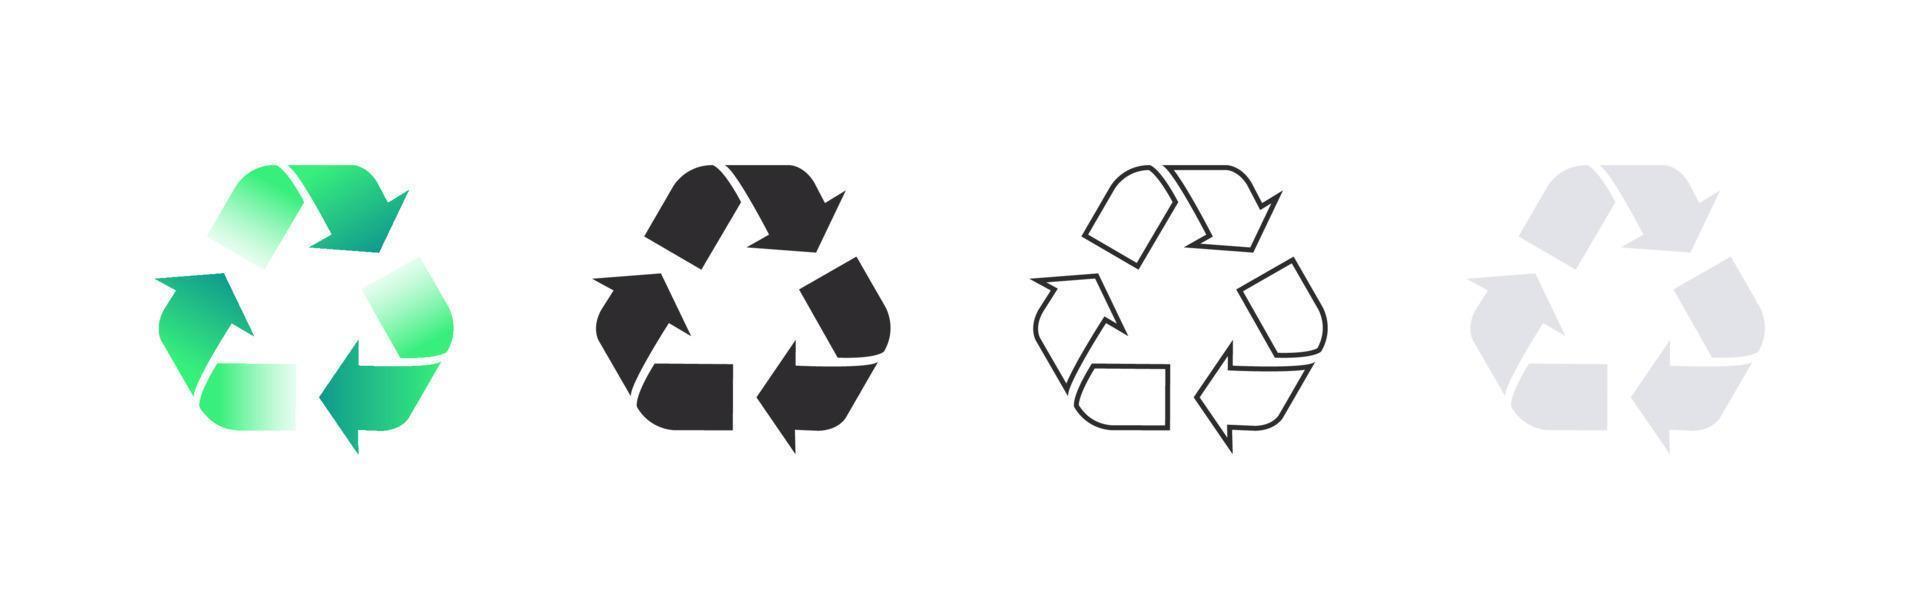 Recycling-Icons-Konzept. wiederverwertete Materialien. Verpackung und Recycling. Vektor-Illustration vektor